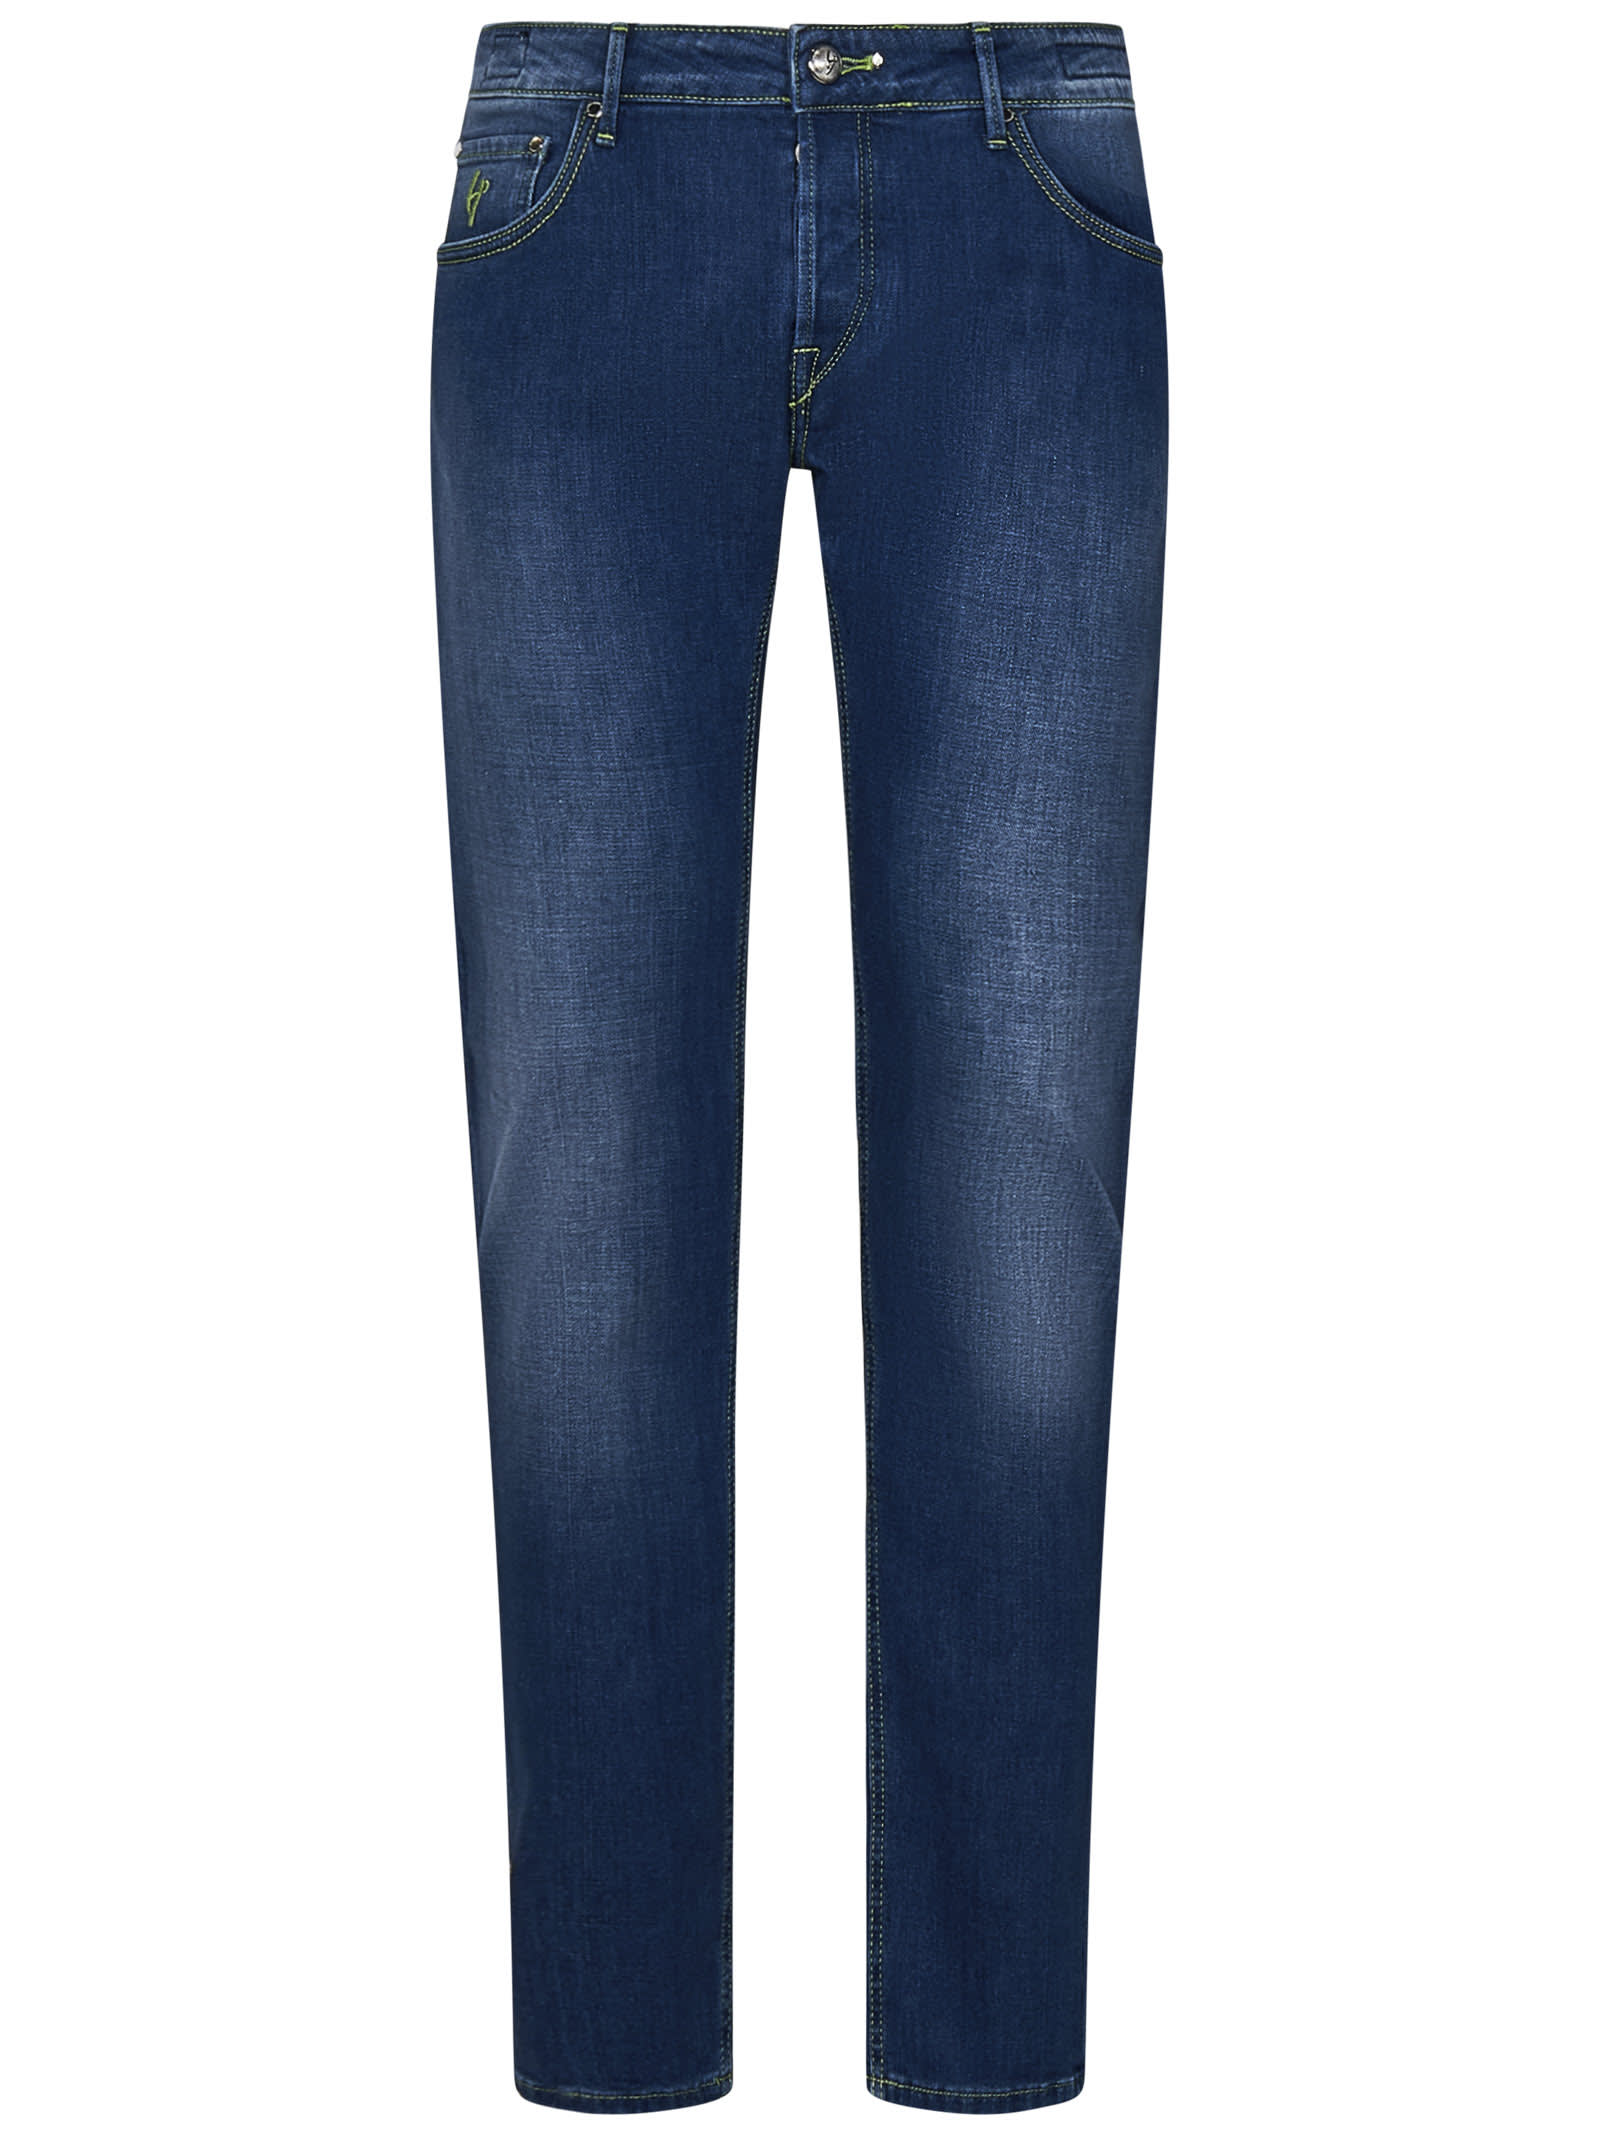 Handpicked Orvieto Jeans